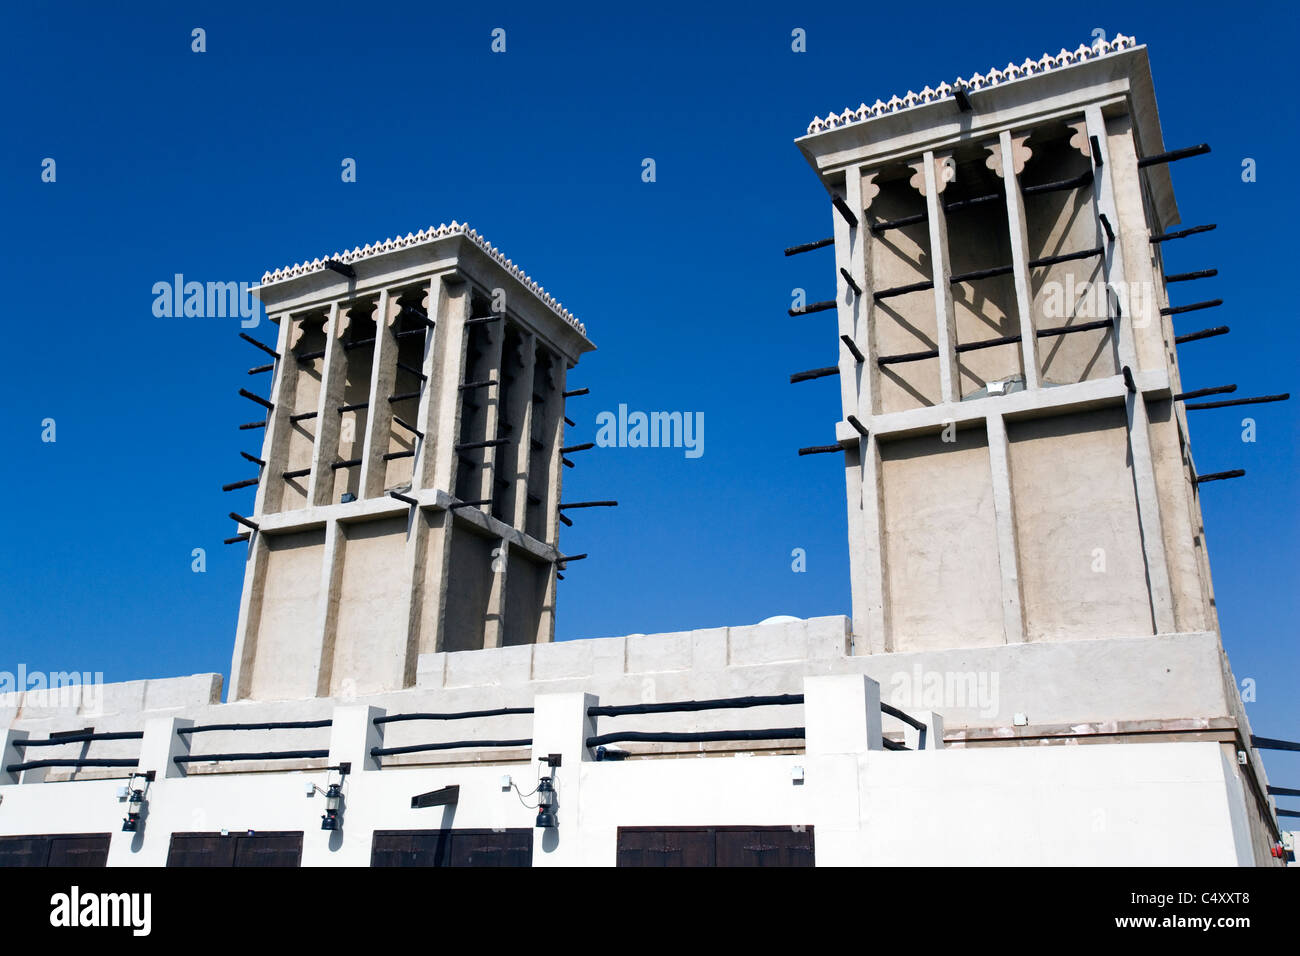 Cooling towers, Heritage, Dubai, UAE, Horizontal image, Copyright; ©Keith Erskine 2005 Stock Photo